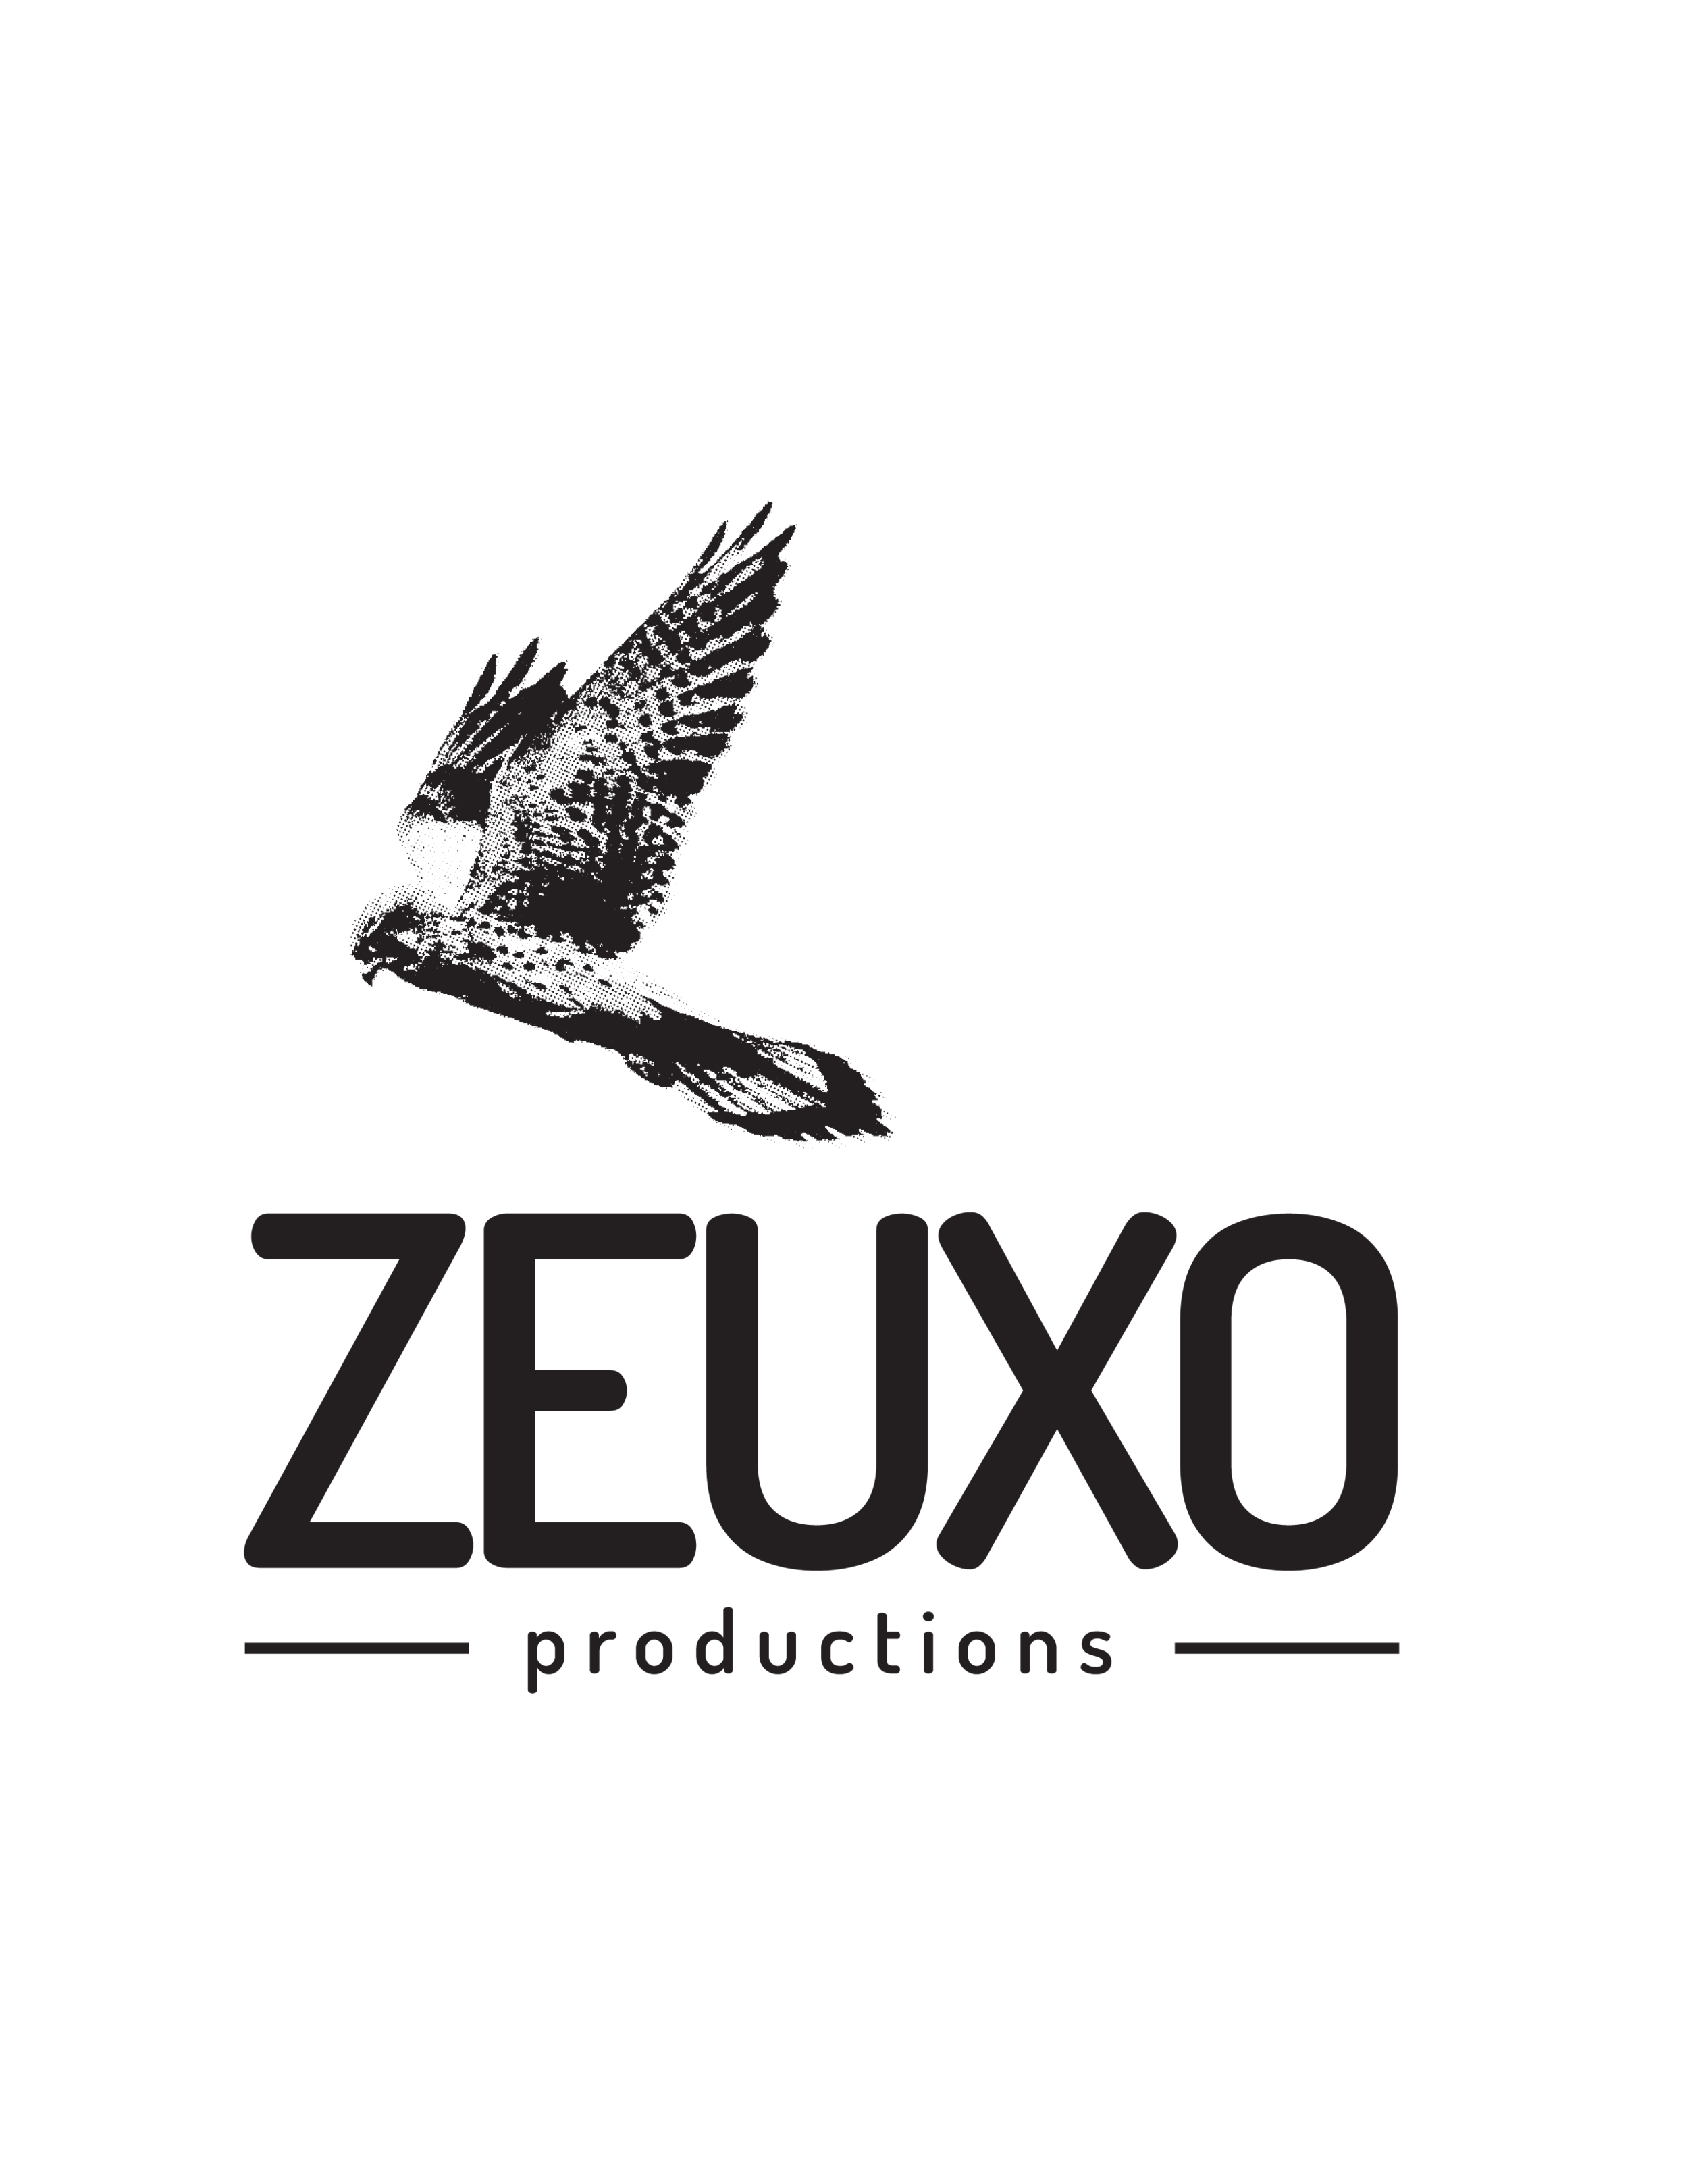 Zeuxo_2021_Bird_Logo_Black_bitmap_bird.png